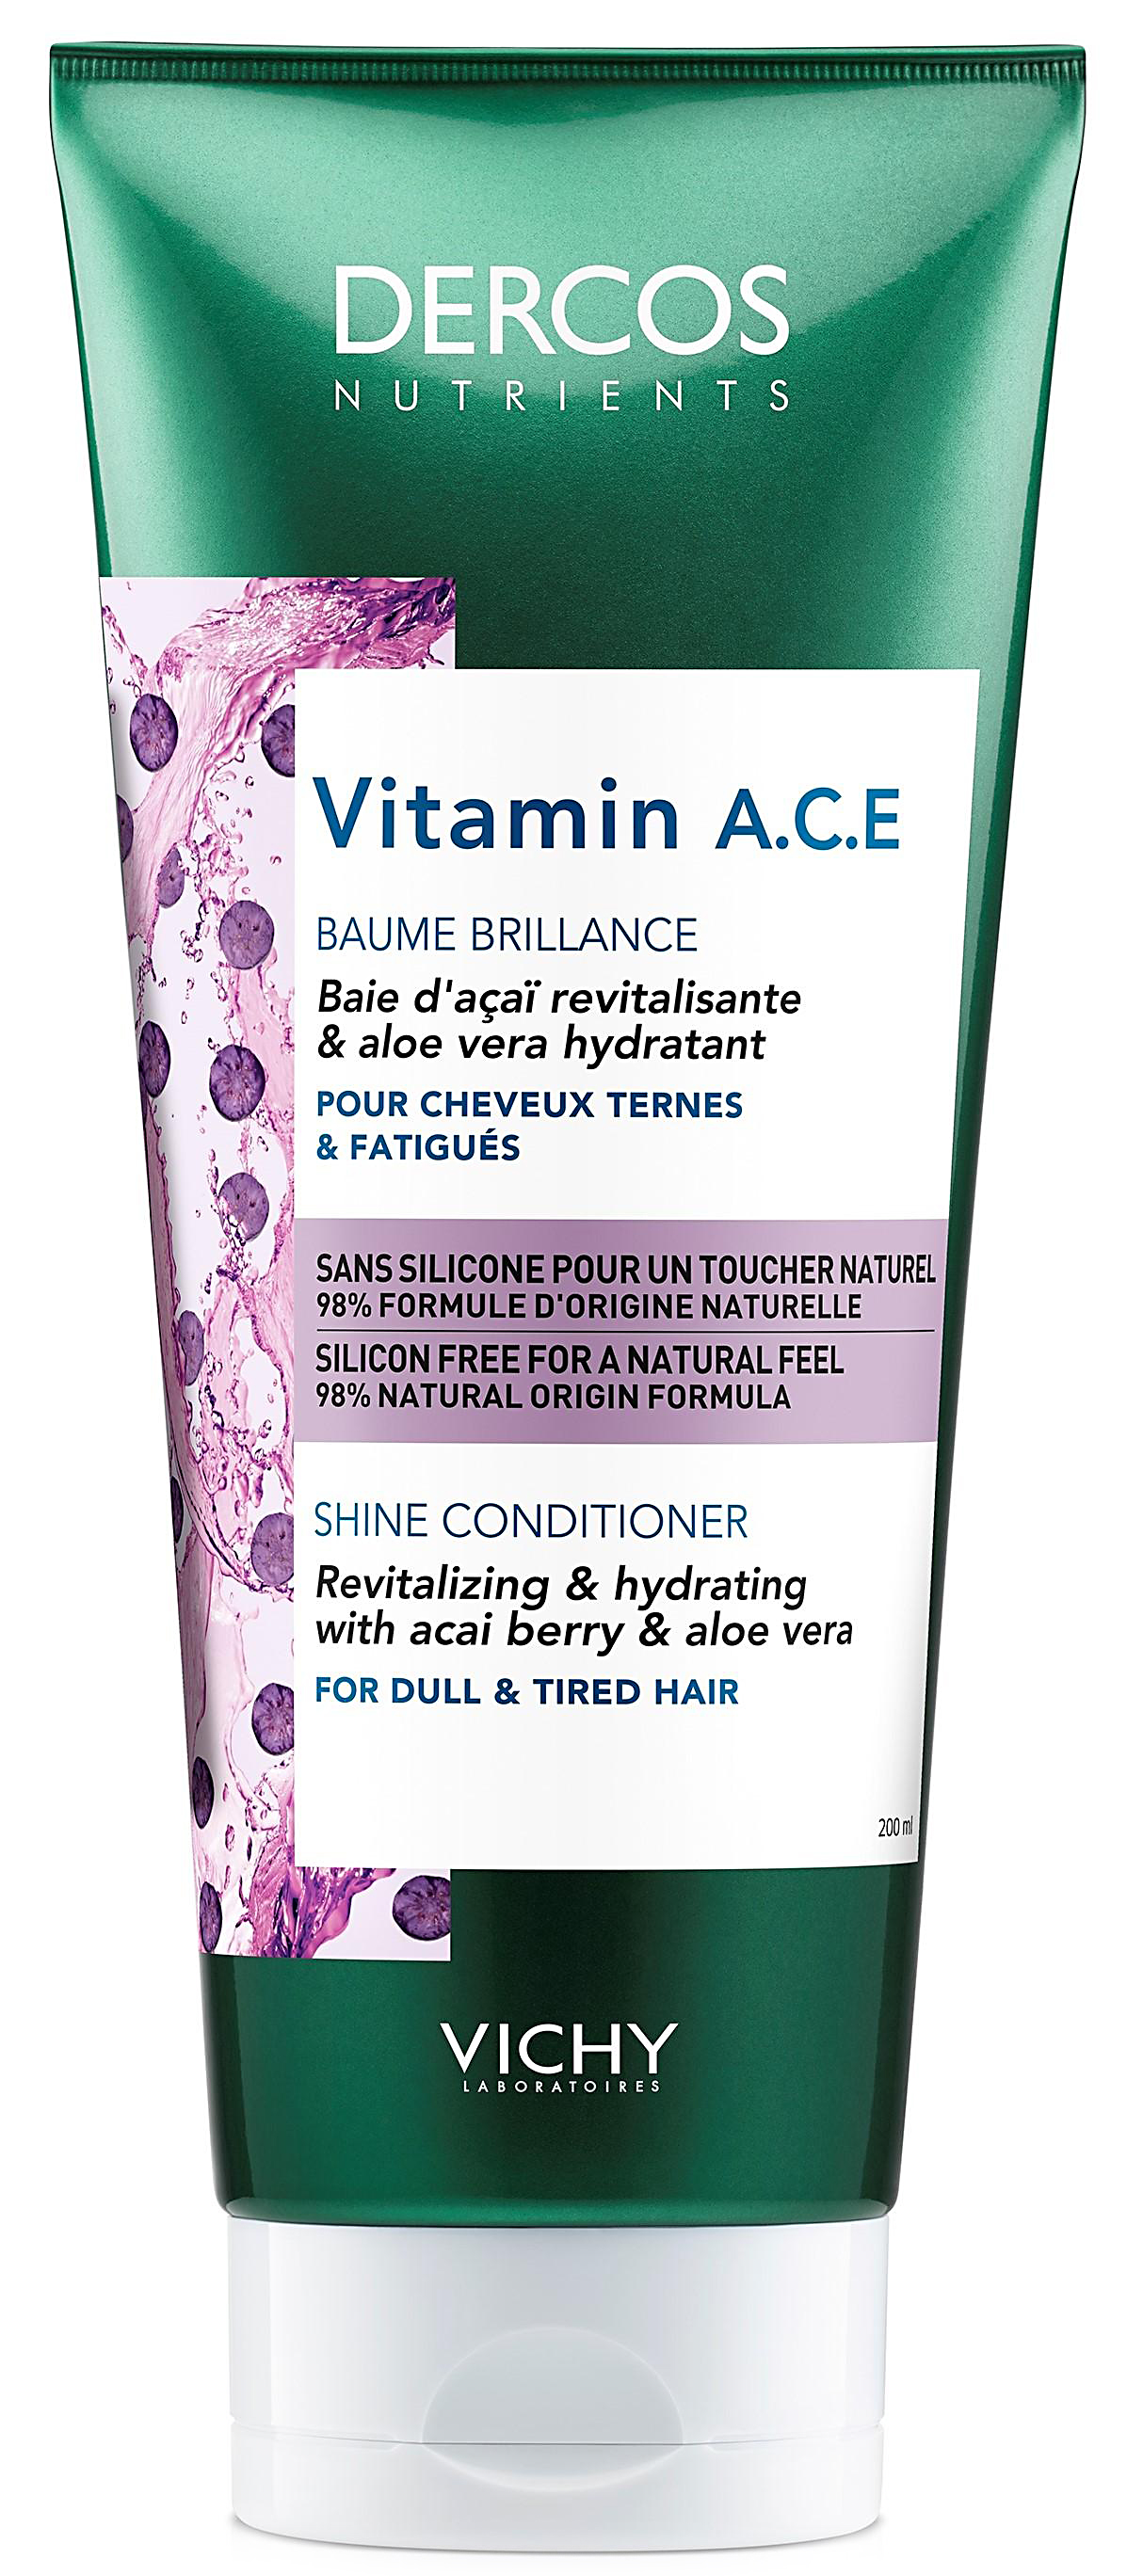 Dercos nutrients vitamin кондиционер для блеска волос 200мл Vichy (Виши)